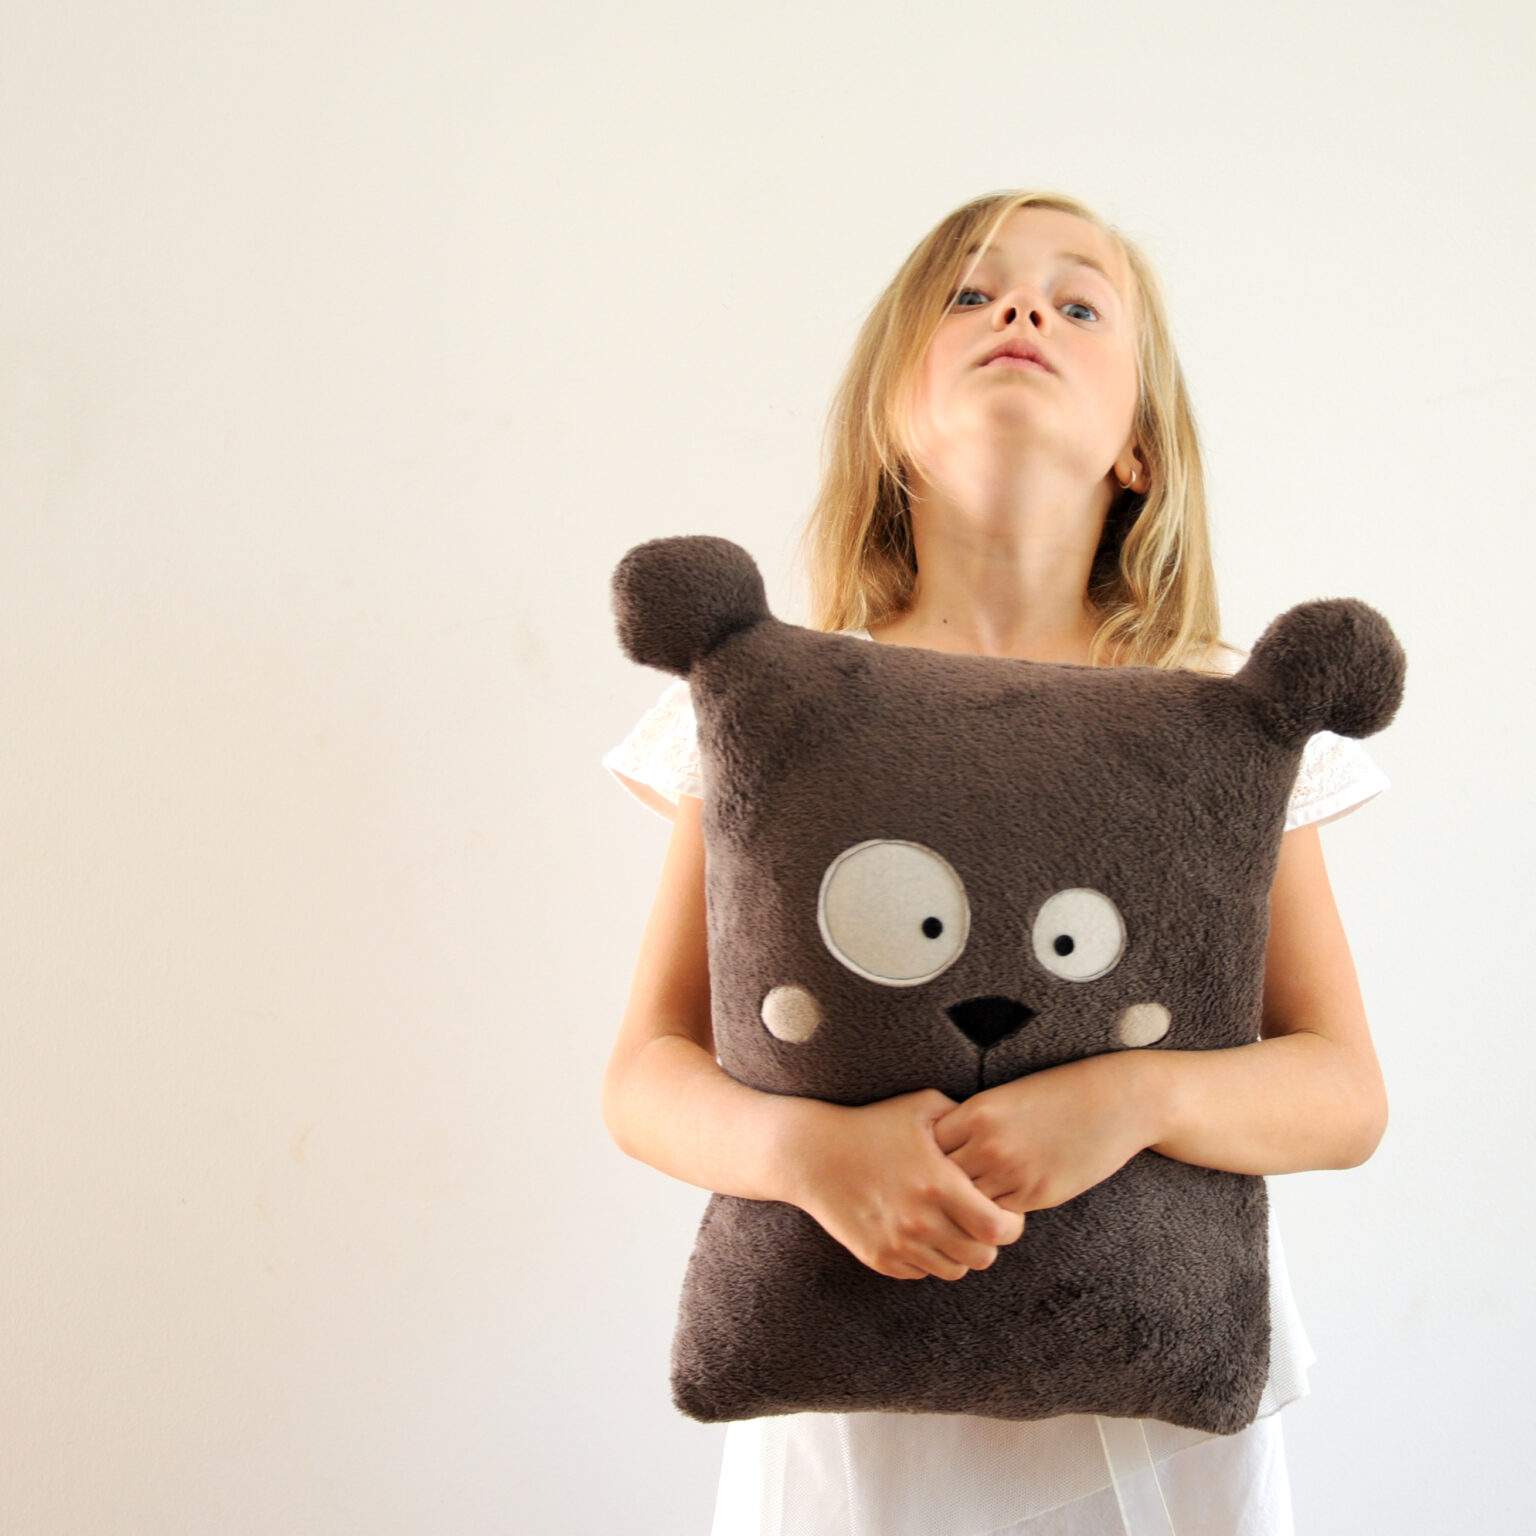 TEDDY BEAR PATTERN | stuffed animal pillow | sewing pattern & tutorial